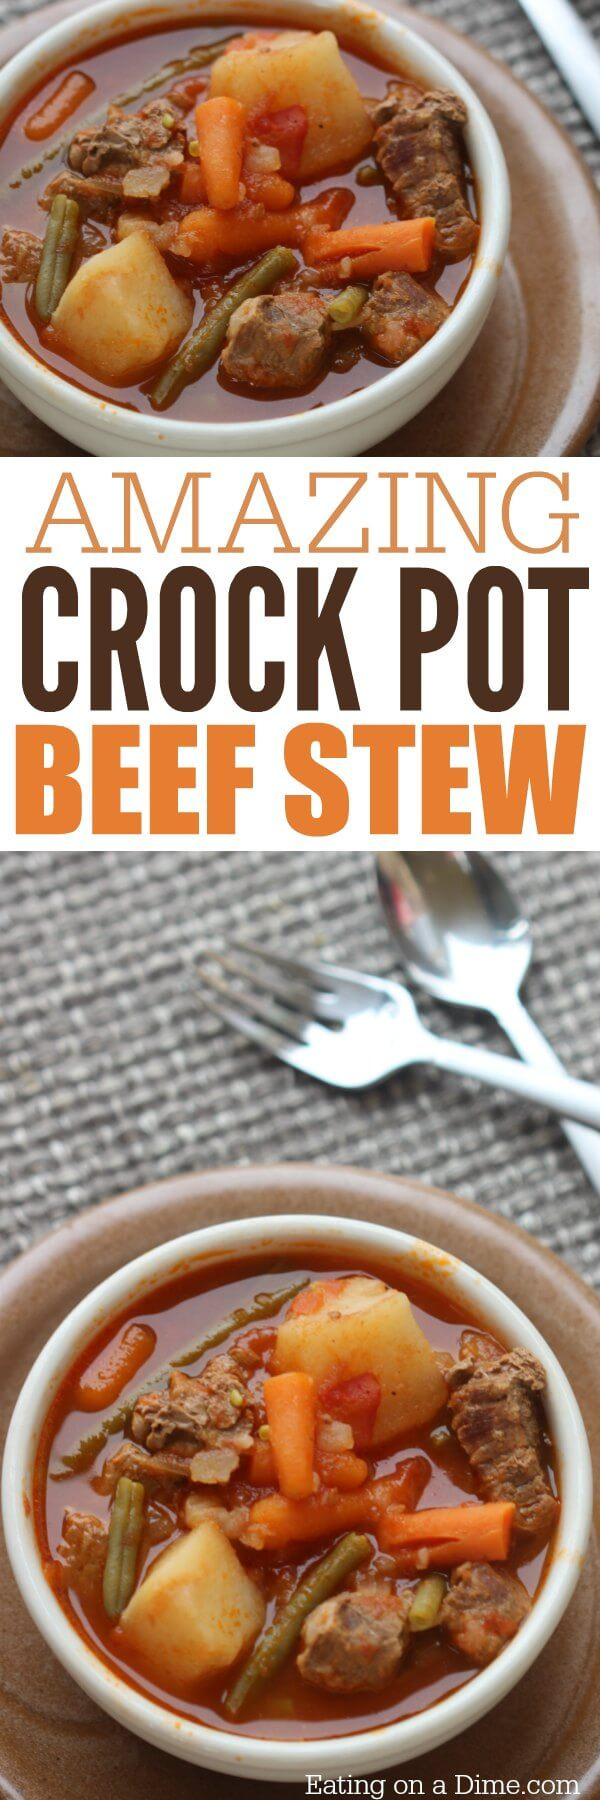 Lamb Stew Recipe Crock Pot
 Quick & Easy Crock pot Beef Stew Recipe Eating on a Dime